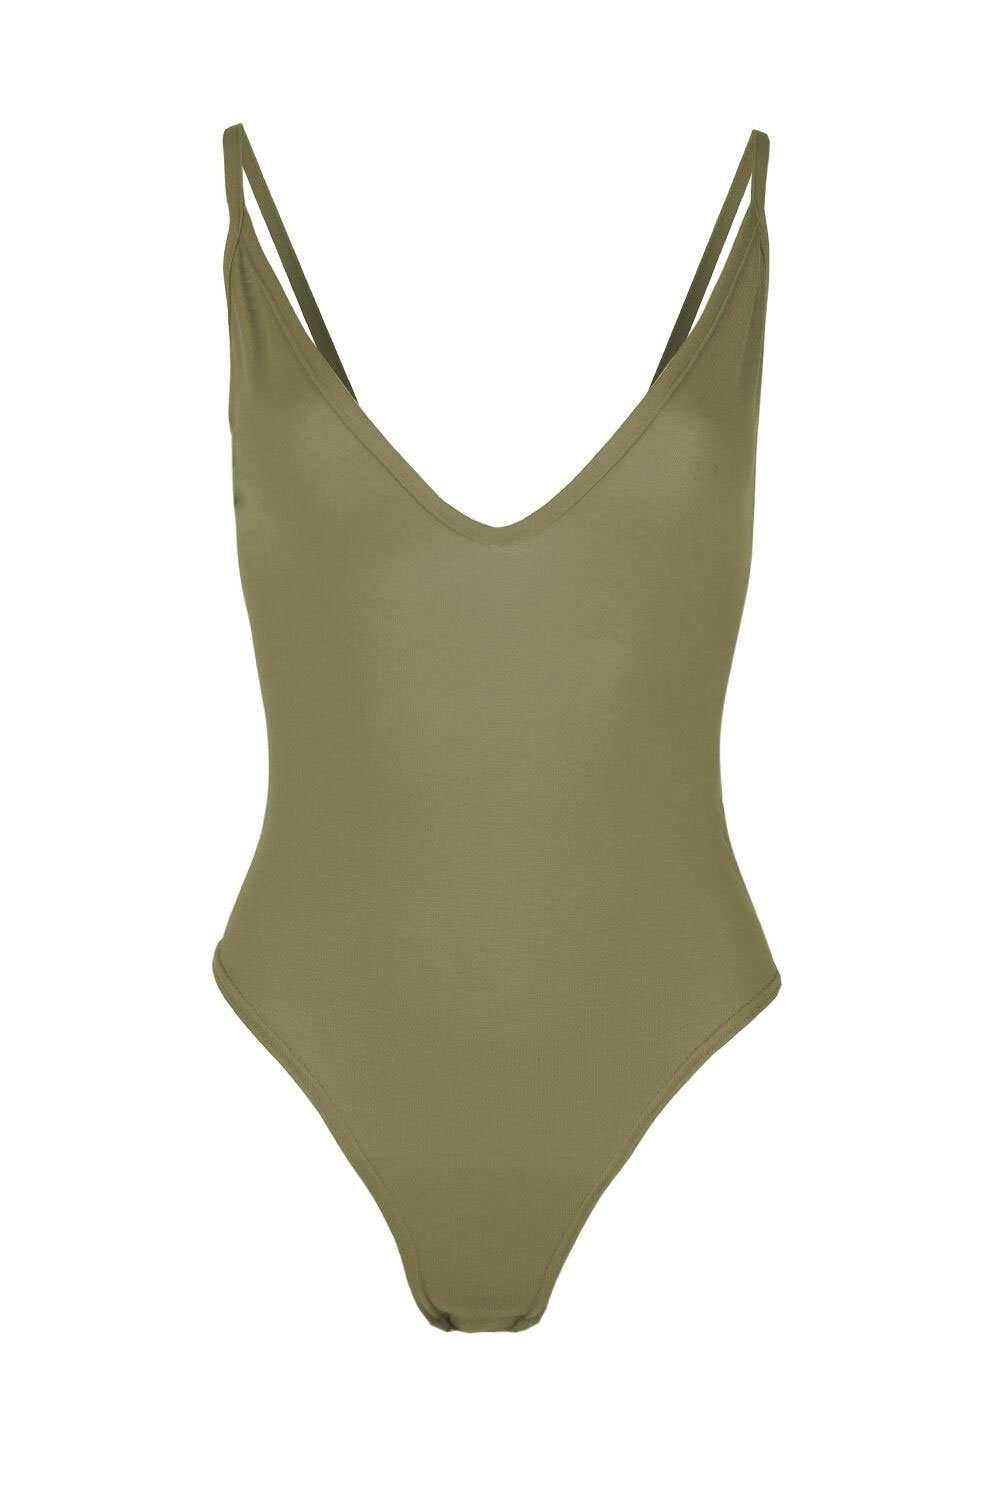 Olivia Plunge Neck Basic Jersey Bodysuit - bejealous-com